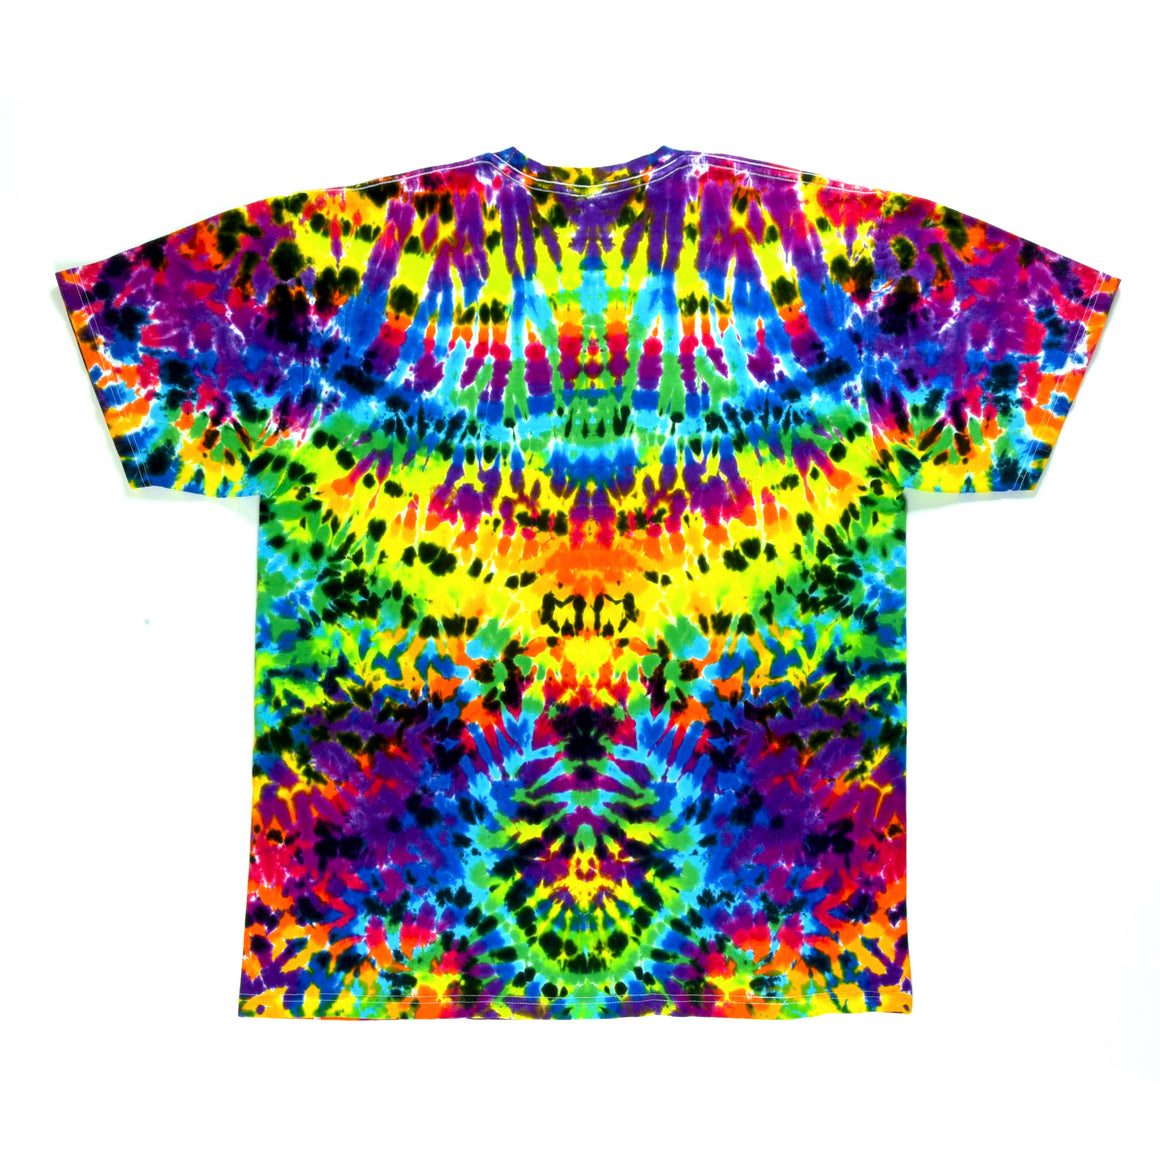 XL Tie Dye T-Shirt - "Elavation"